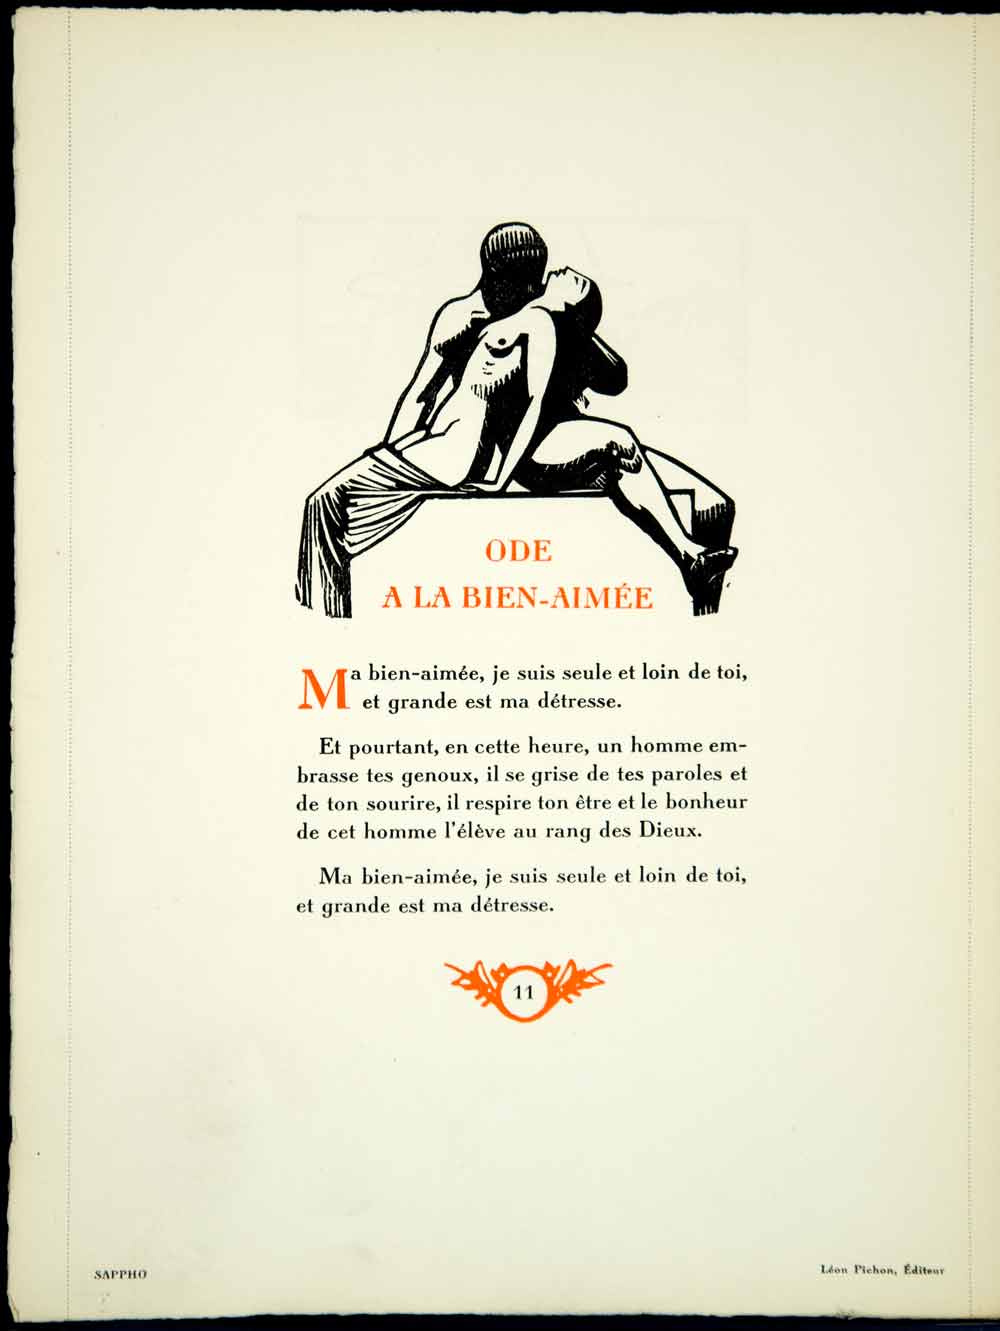 1928 Lithograph Carlegle Nude Art Sappho Poem Lover LGBT Rene Puaux Poetry ADLC2